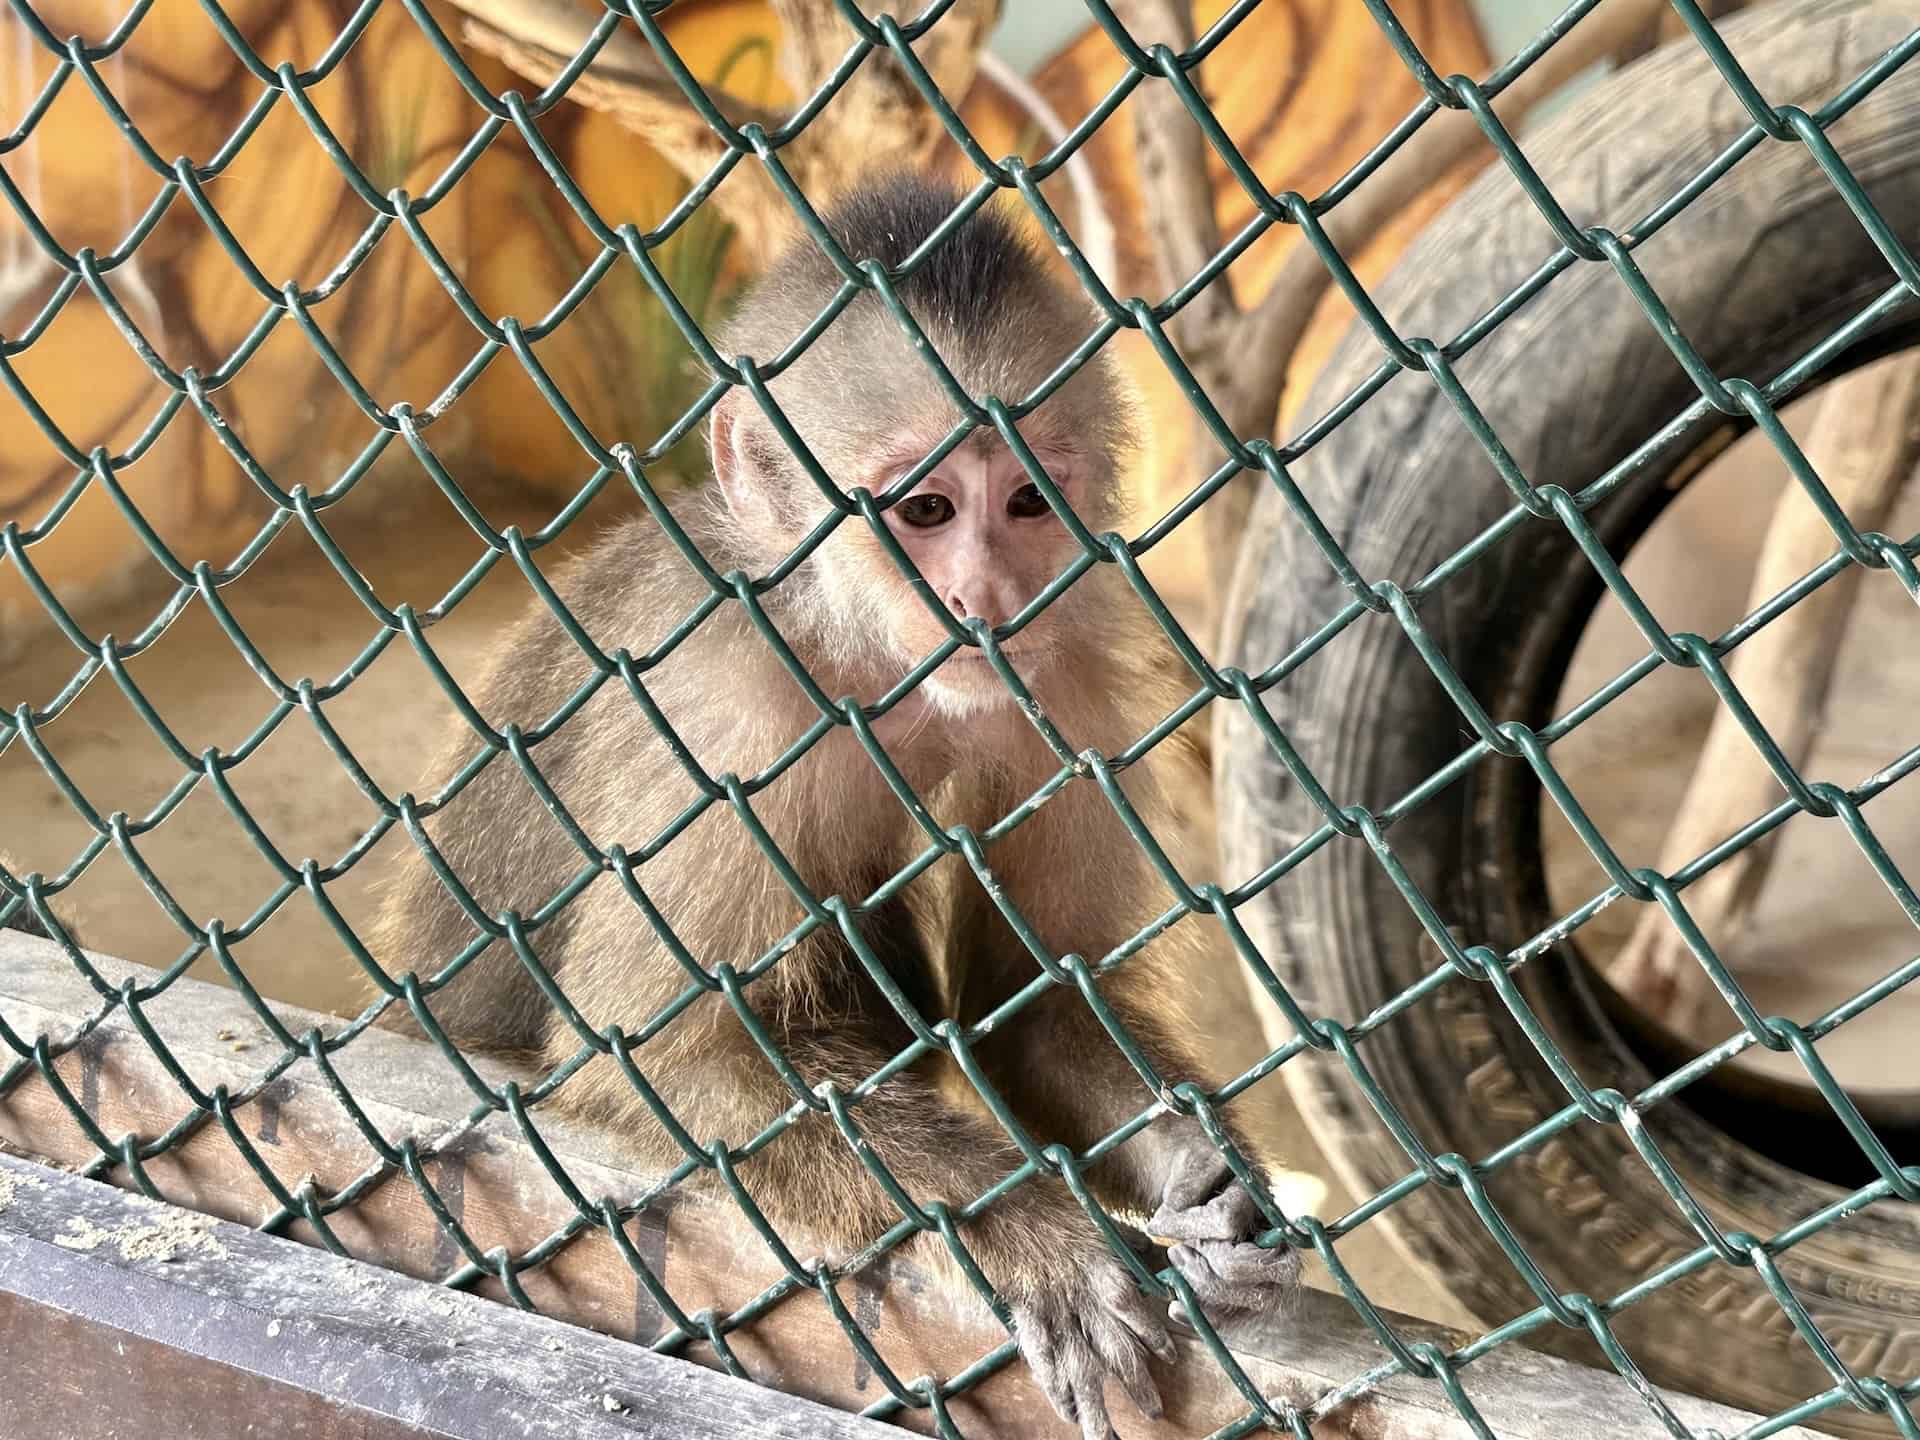 Monkey at Philip's Animal Garden in Noord, Aruba